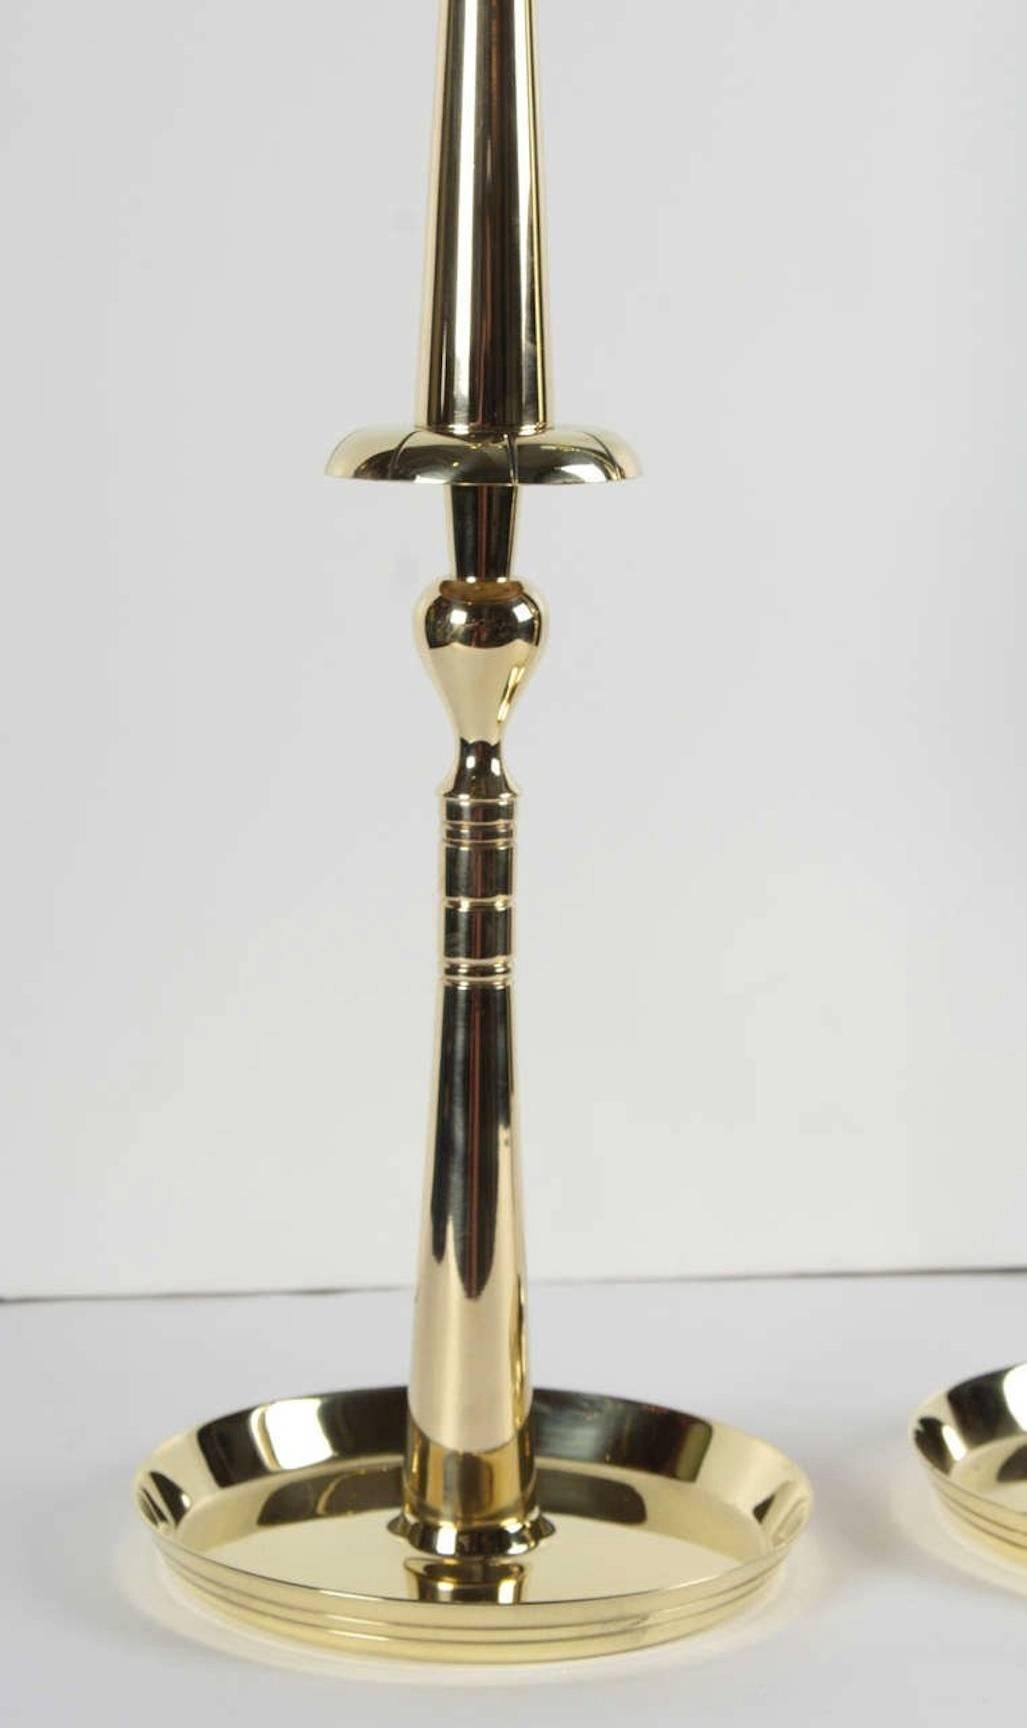 Pair of elegant brass spindle candlesticks designed by Tommi Parzinger.